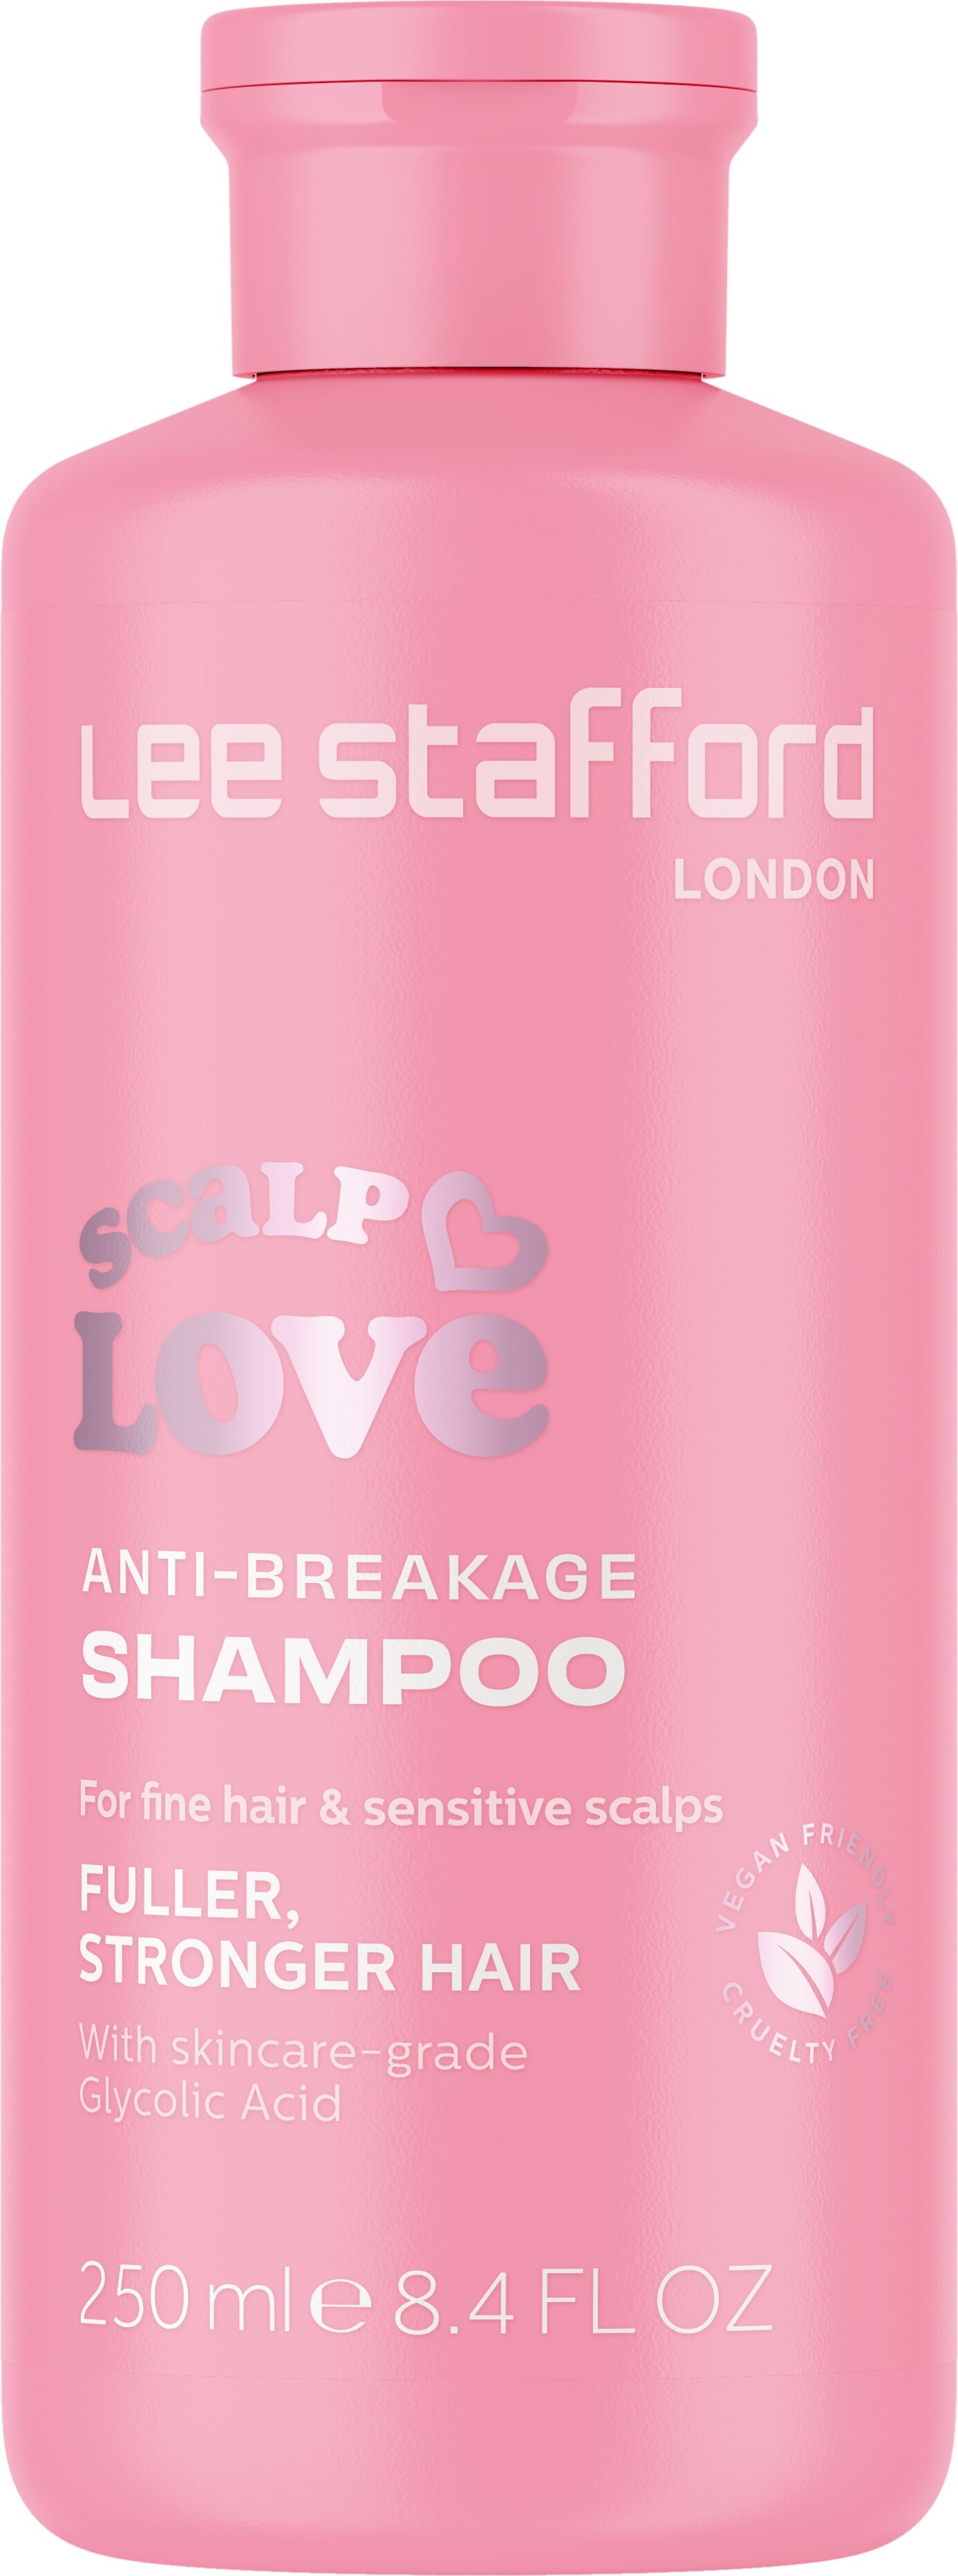 Se Lee Stafford - Scalp Love Anti-breakage Shampoo - 250 Ml hos Gucca.dk